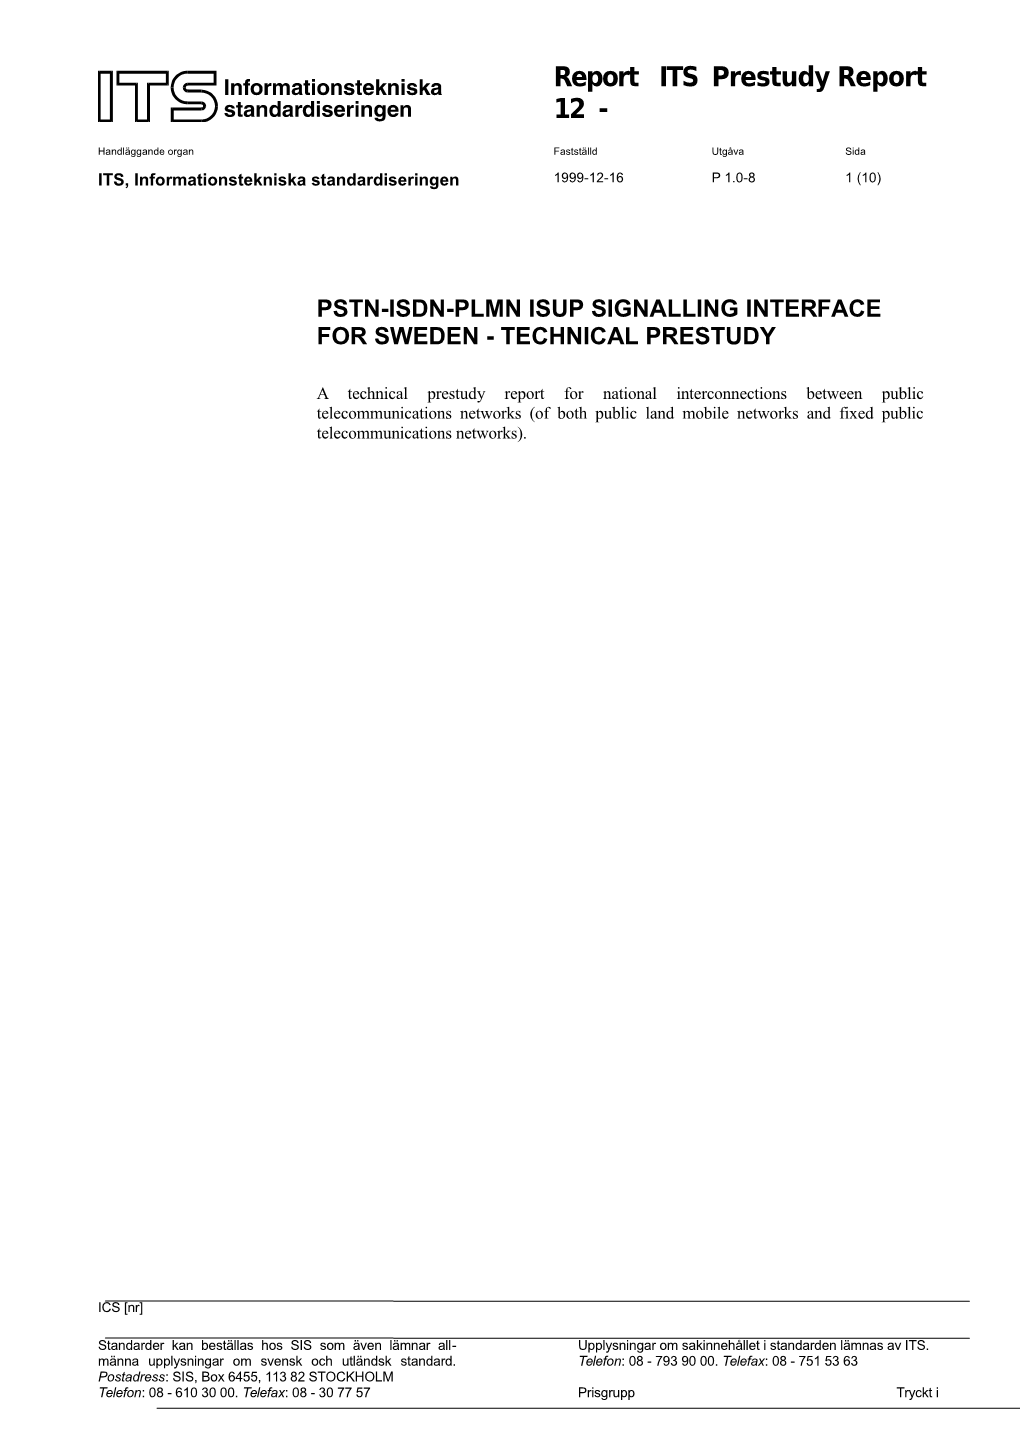 PSTN-ISDN-PLMN ISUP Signalling Interface for SWEDEN - Technical Prestudy